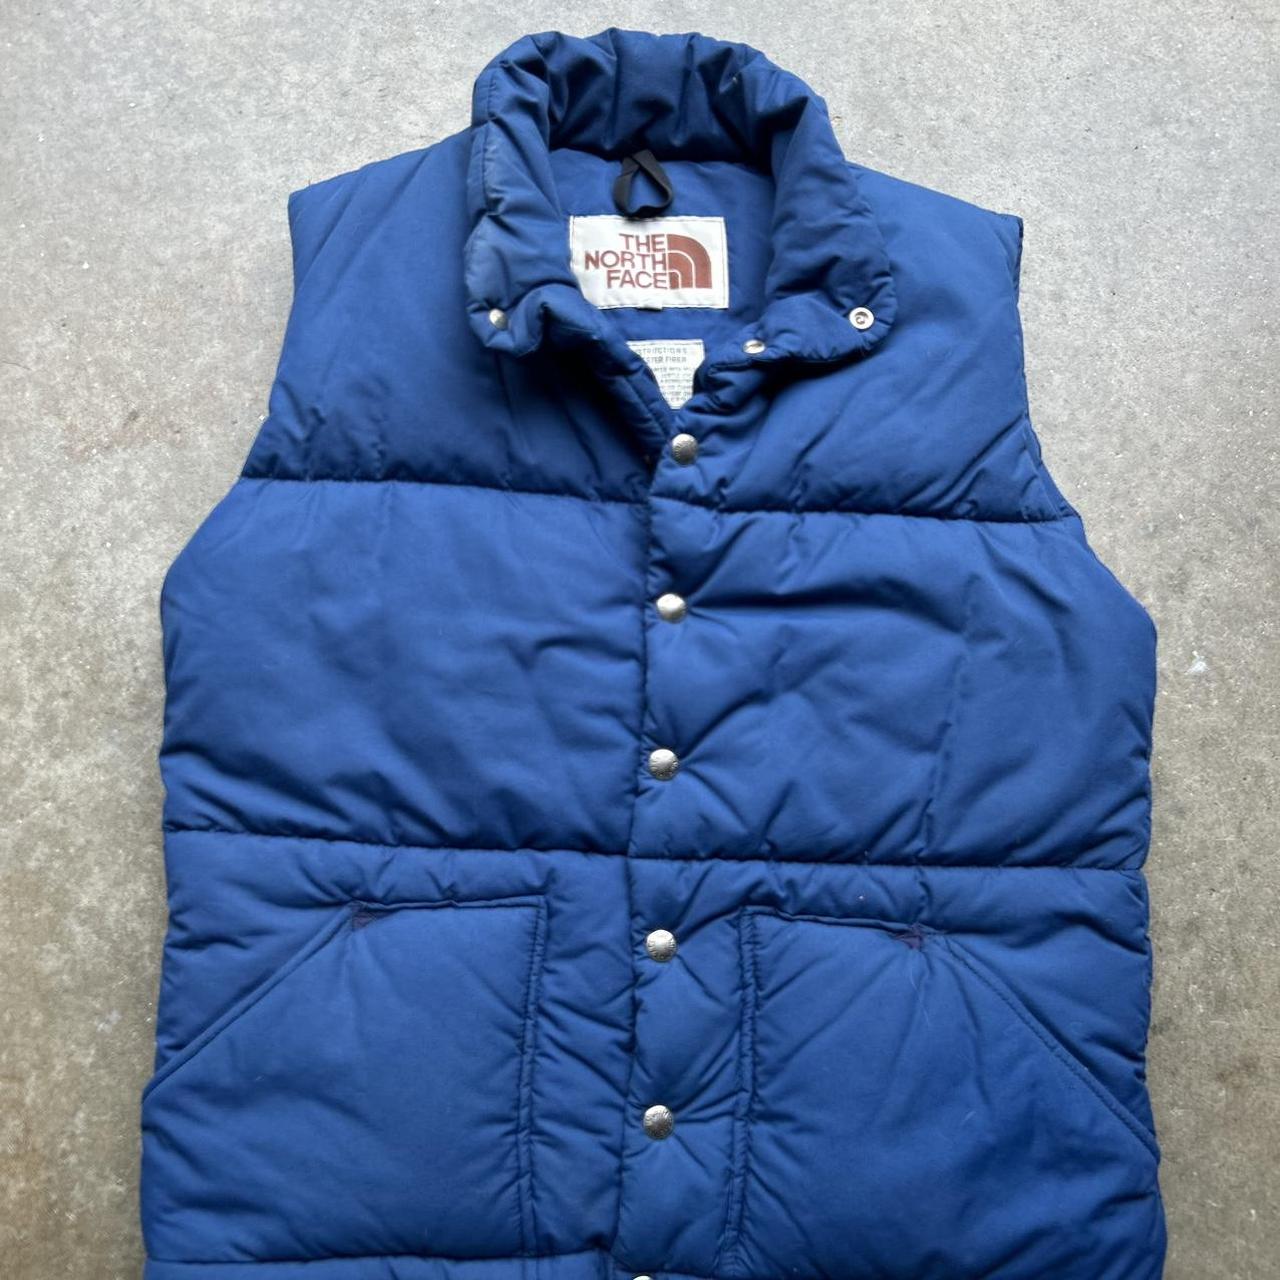 Vintage 80s The North Face Puffer Vest Blue Size... - Depop